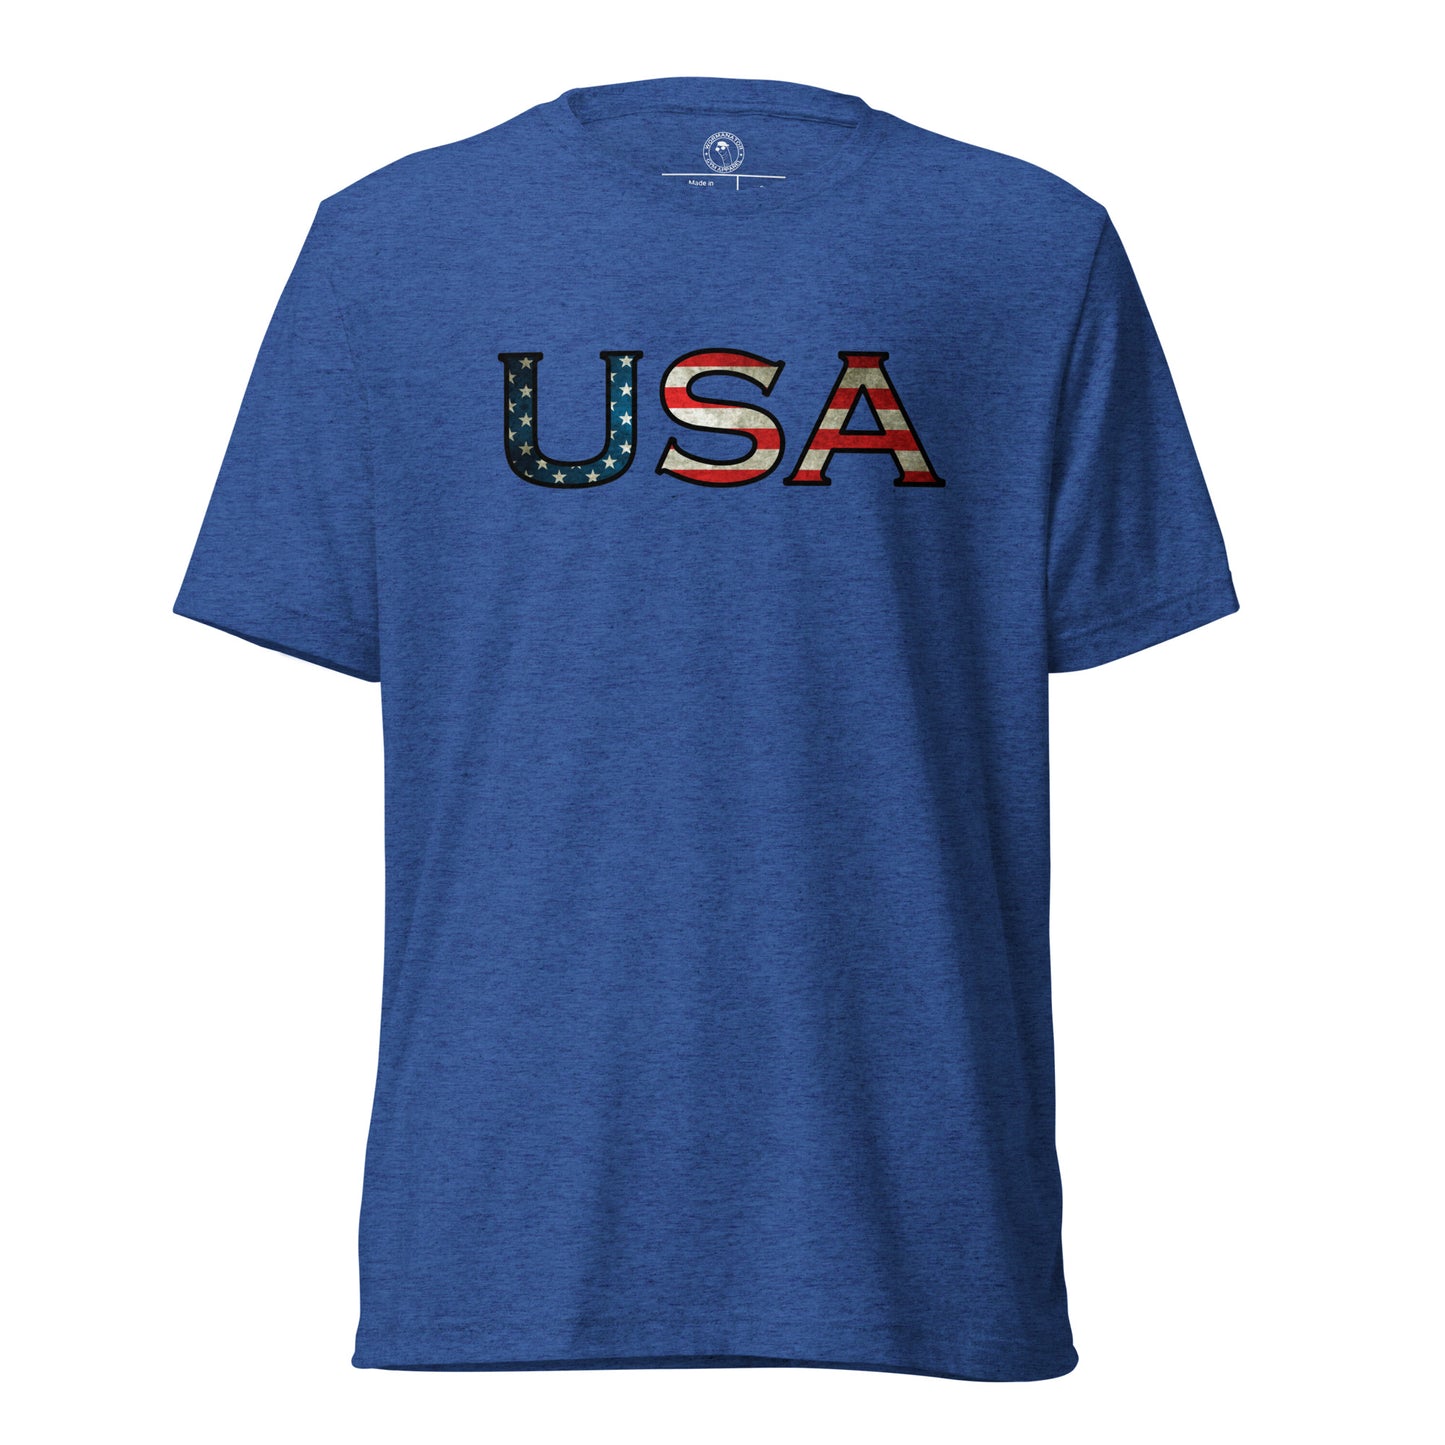 USA T-Shirt in True Royal Triblend